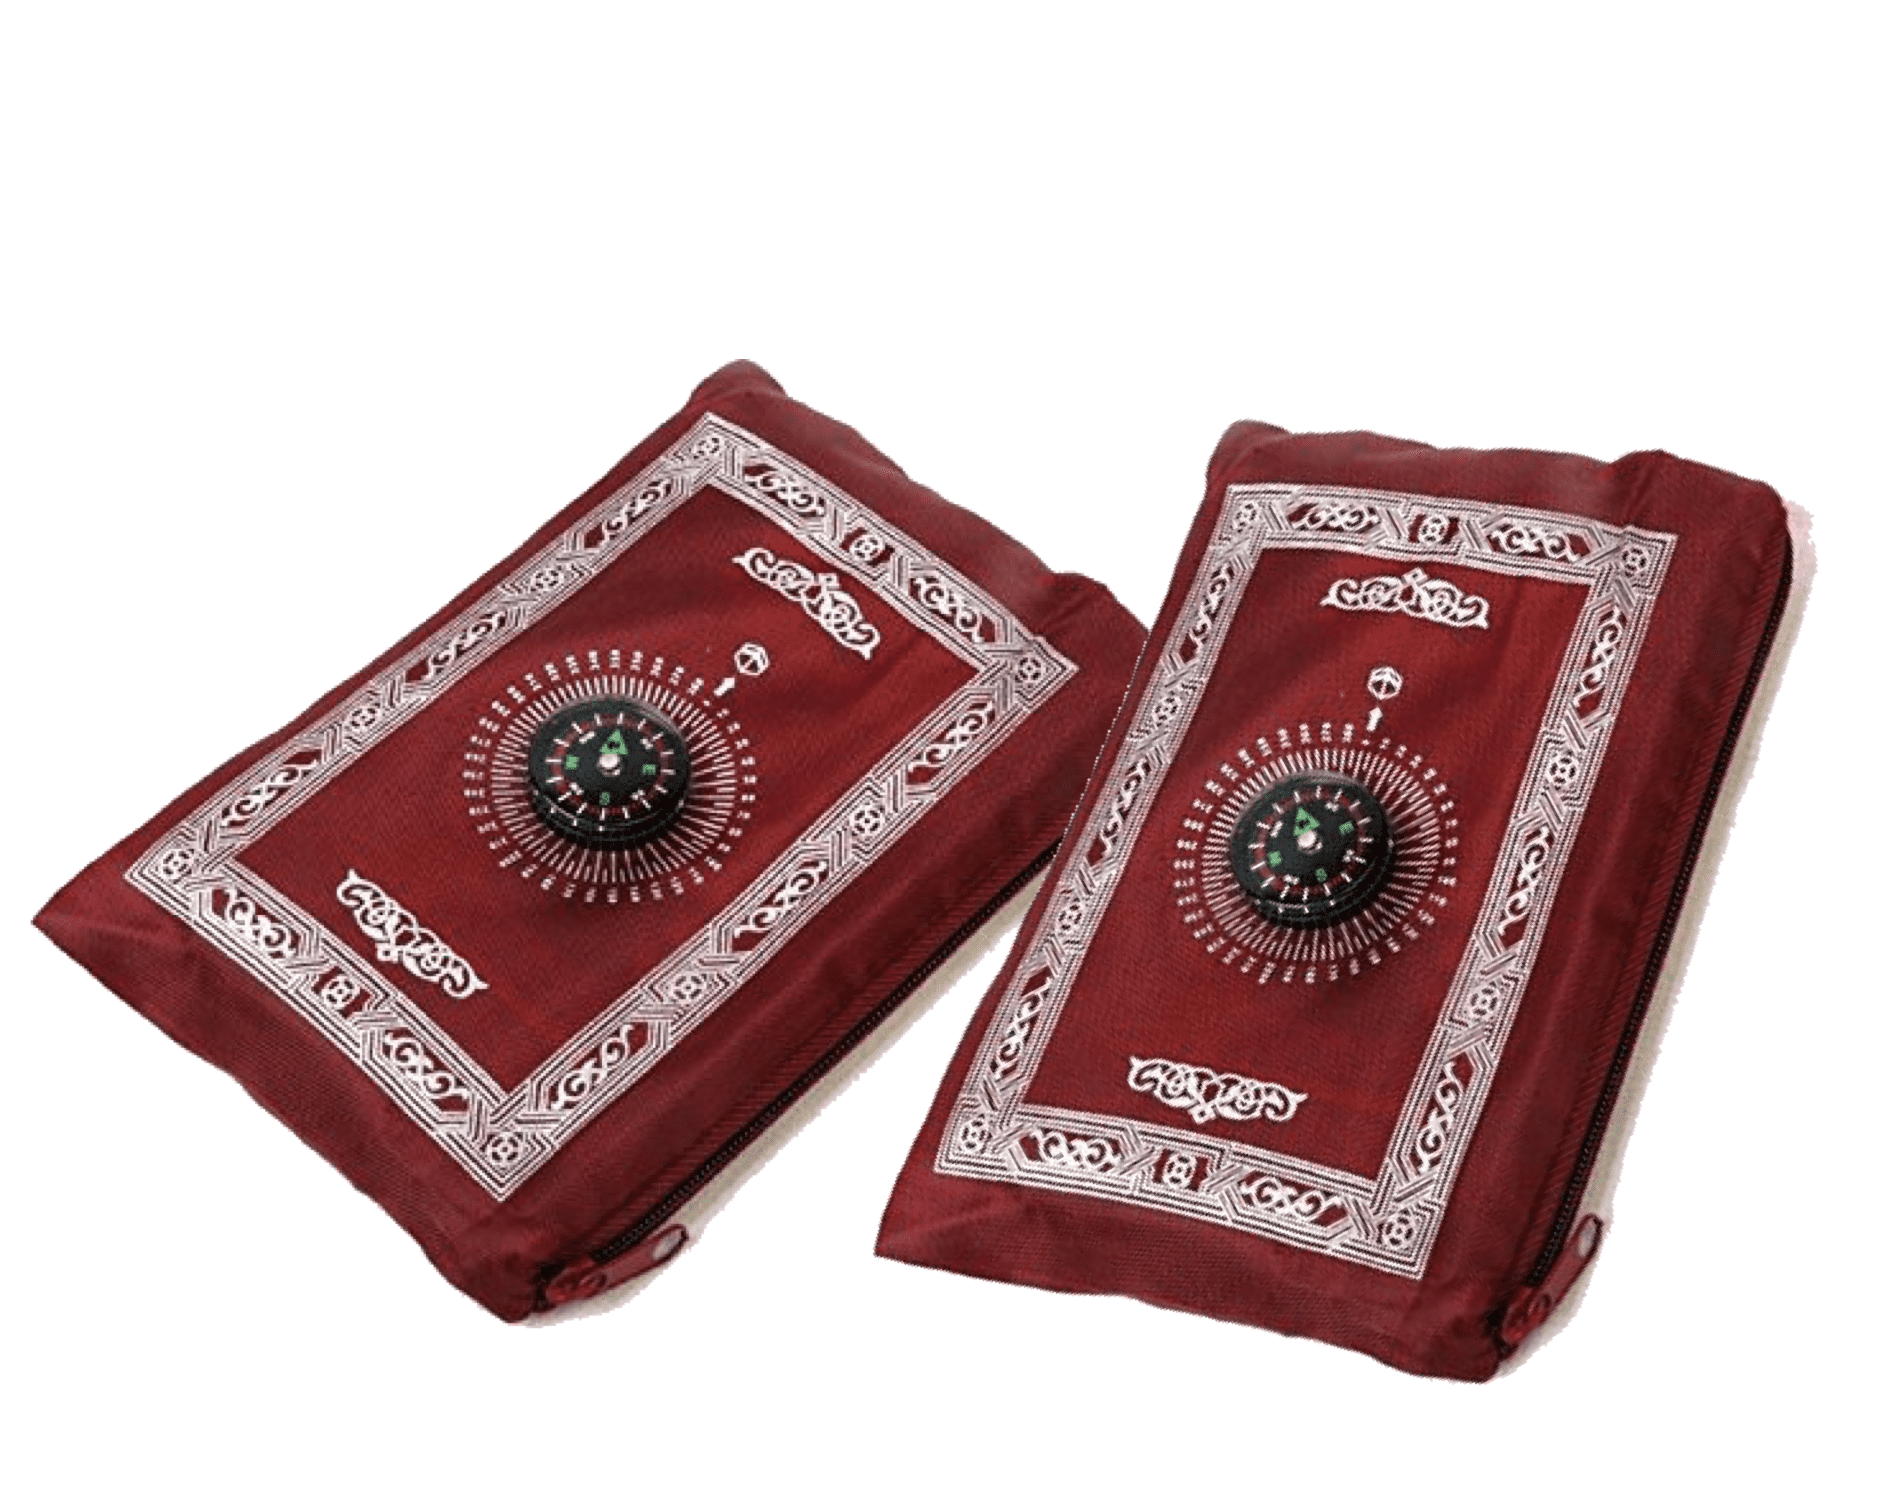 10 Pcs Egy-tex Portable Prayer rugs Pocket Size& Shoe bags Muslim Praying Mat Travel Ramadan Eid Gift 5 rugs& 5 shoe bags 